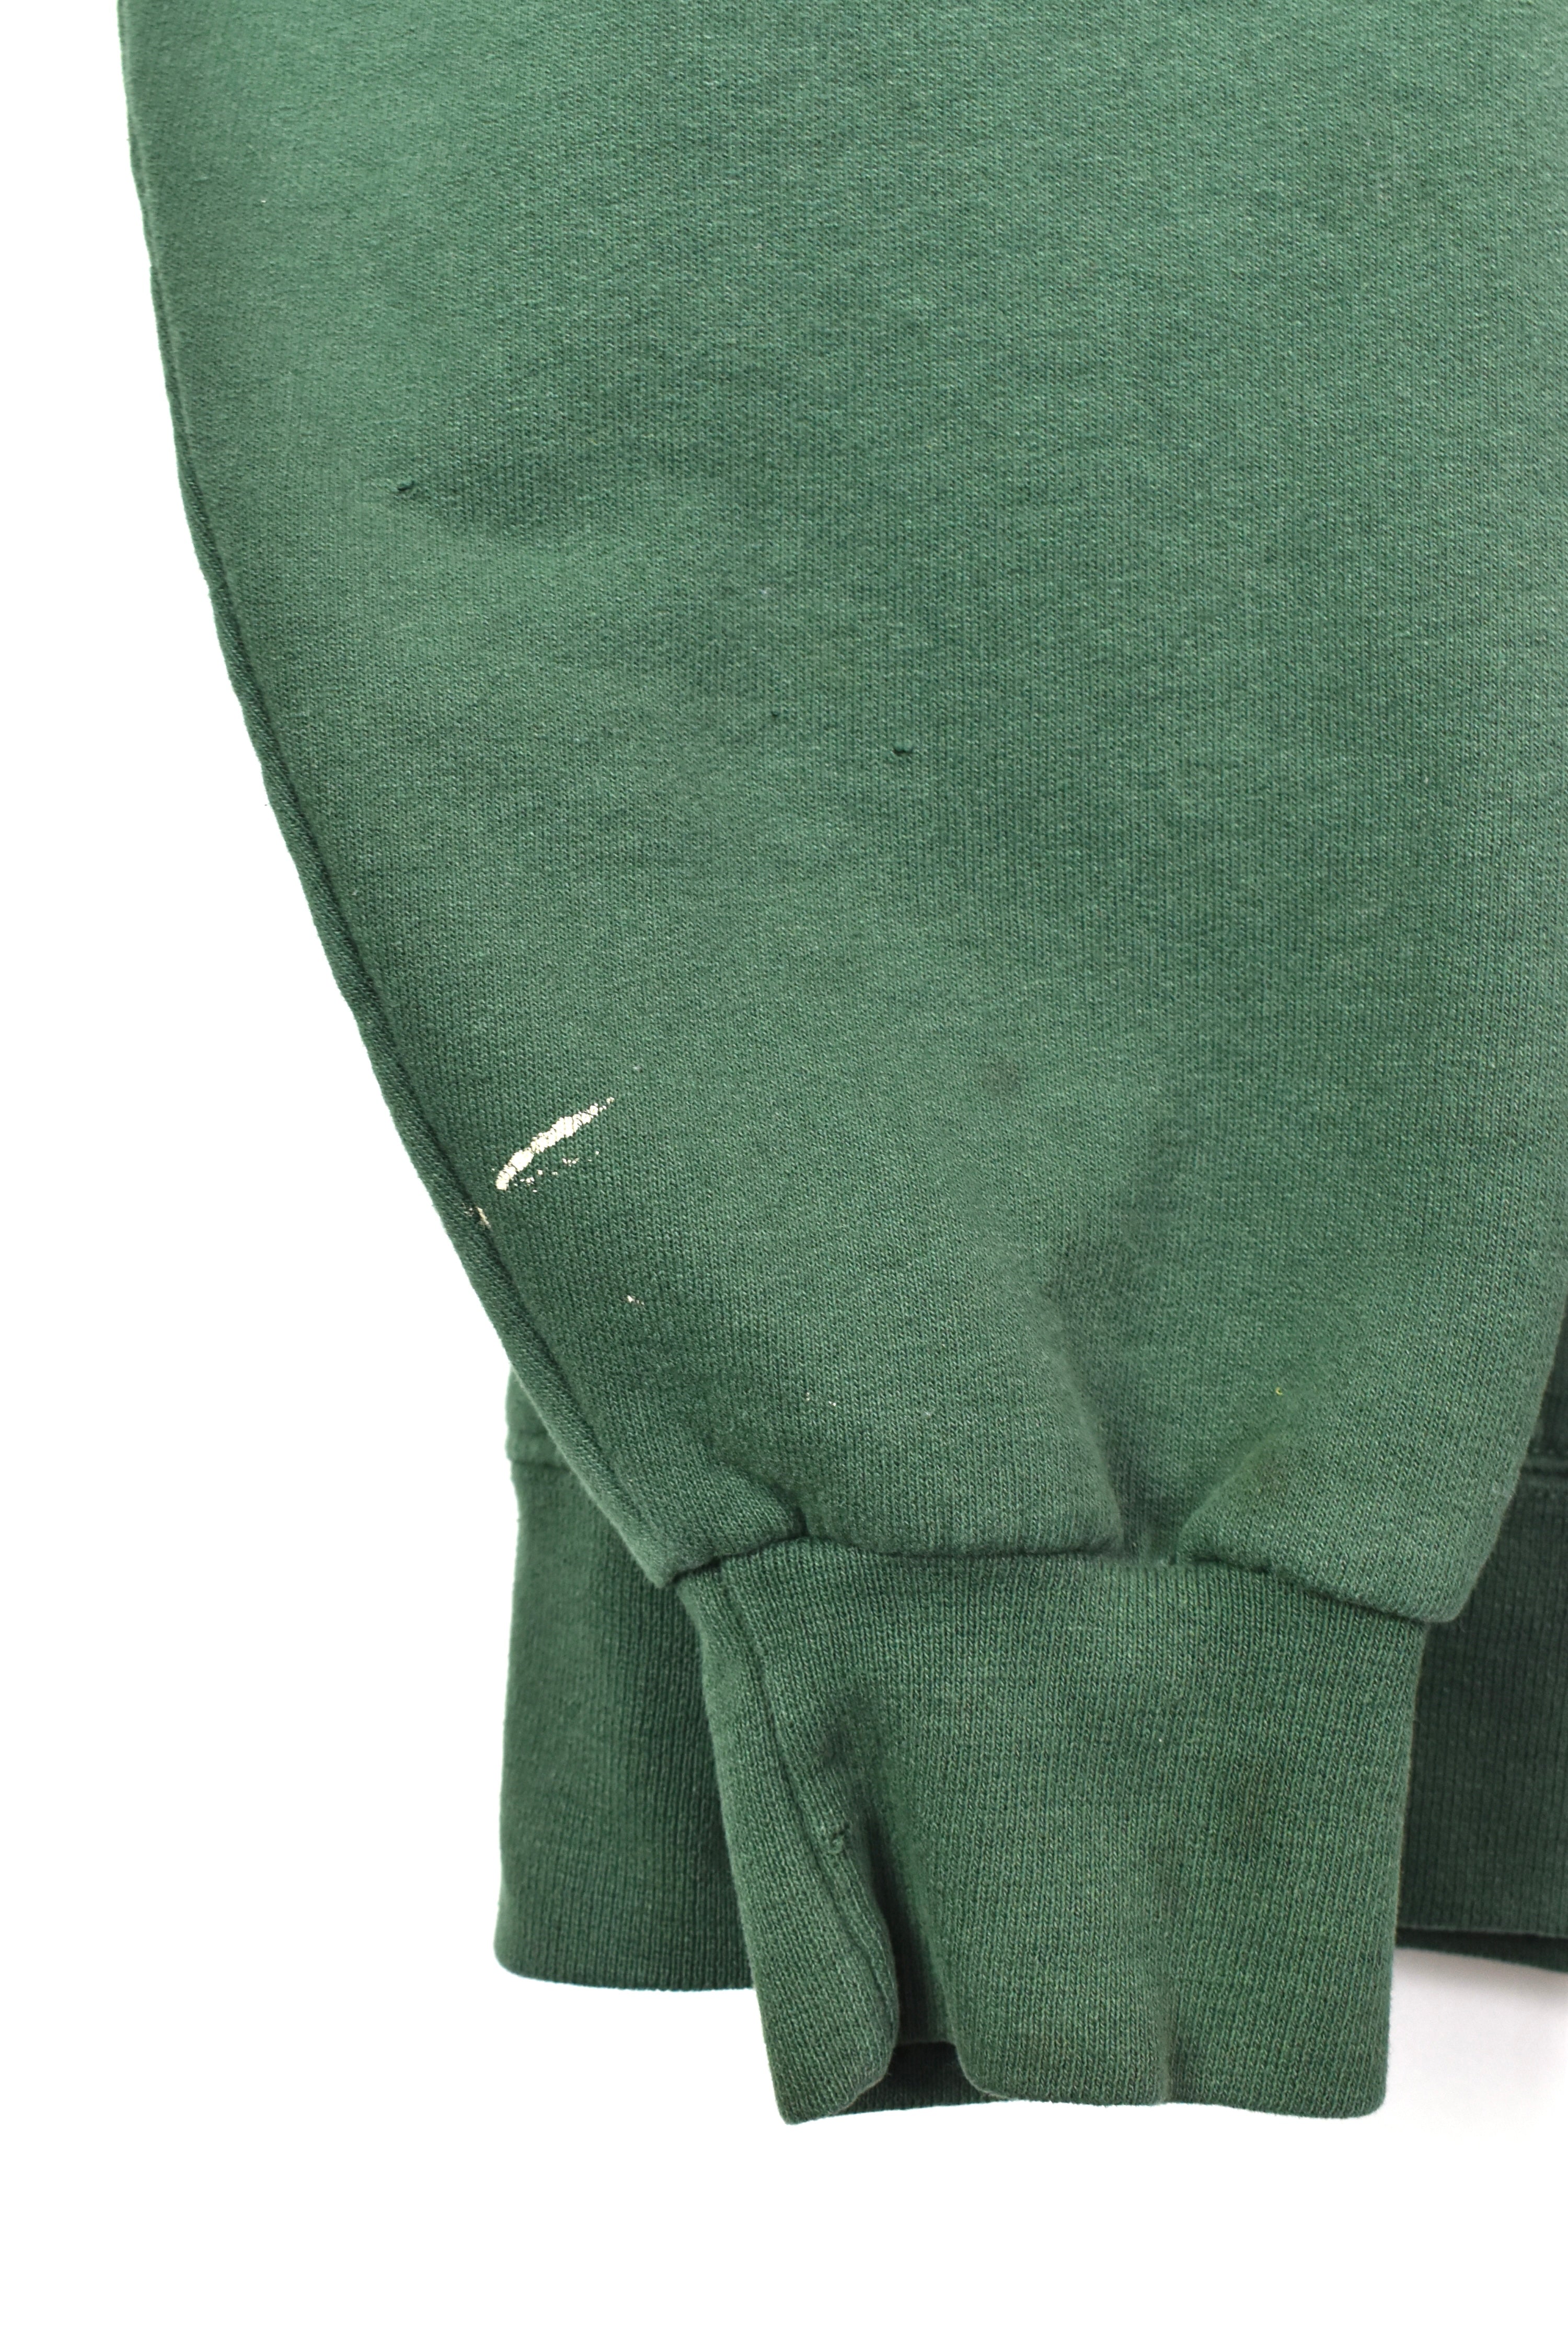 Vintage Brockport Football hoodie, pullover New York University sweatshirt - large, green COLLEGE